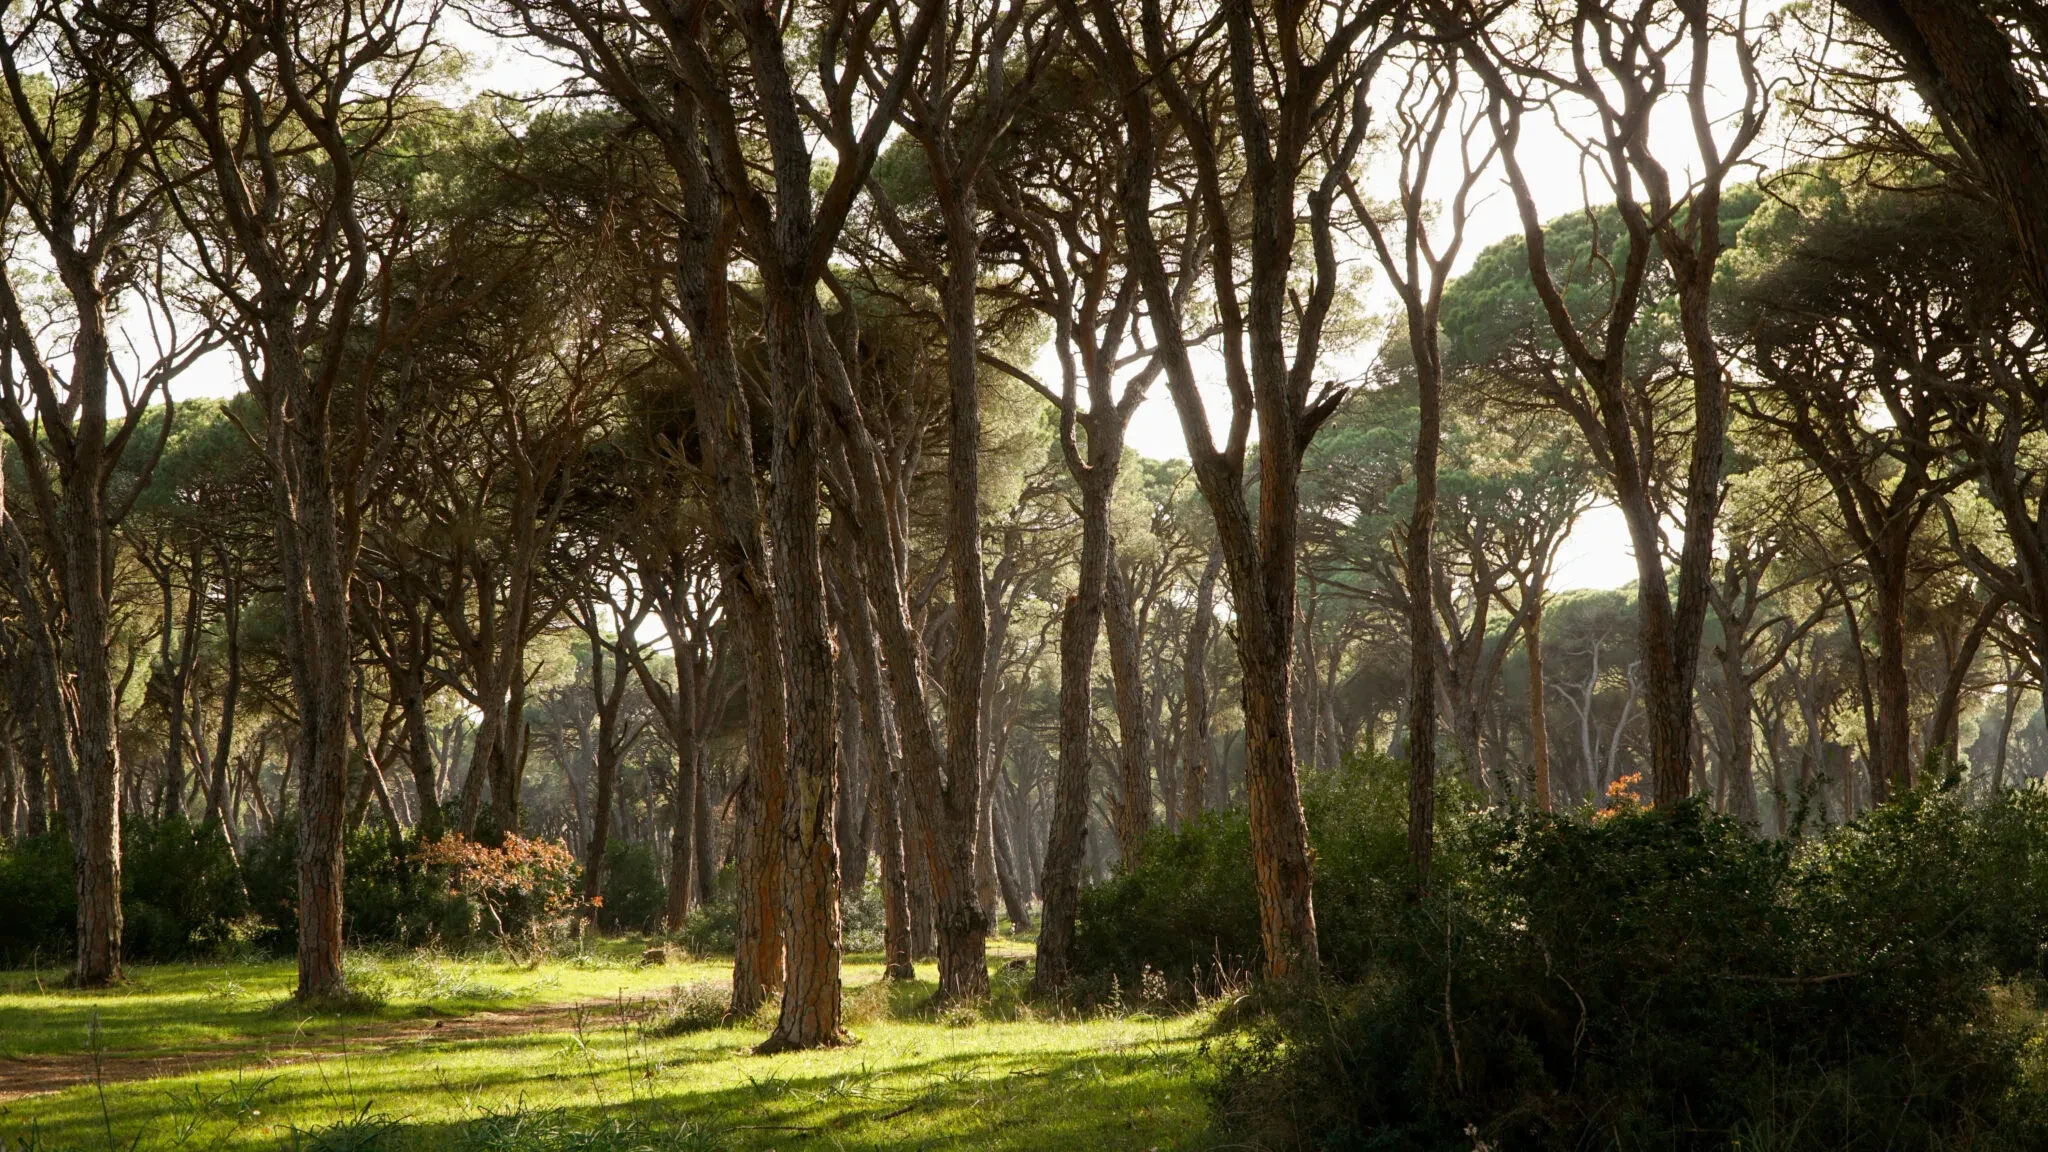 More information about "Δάσος Στροφυλιάς: Ένα καταπράσινο καταφύγιο άγριας ζωής"